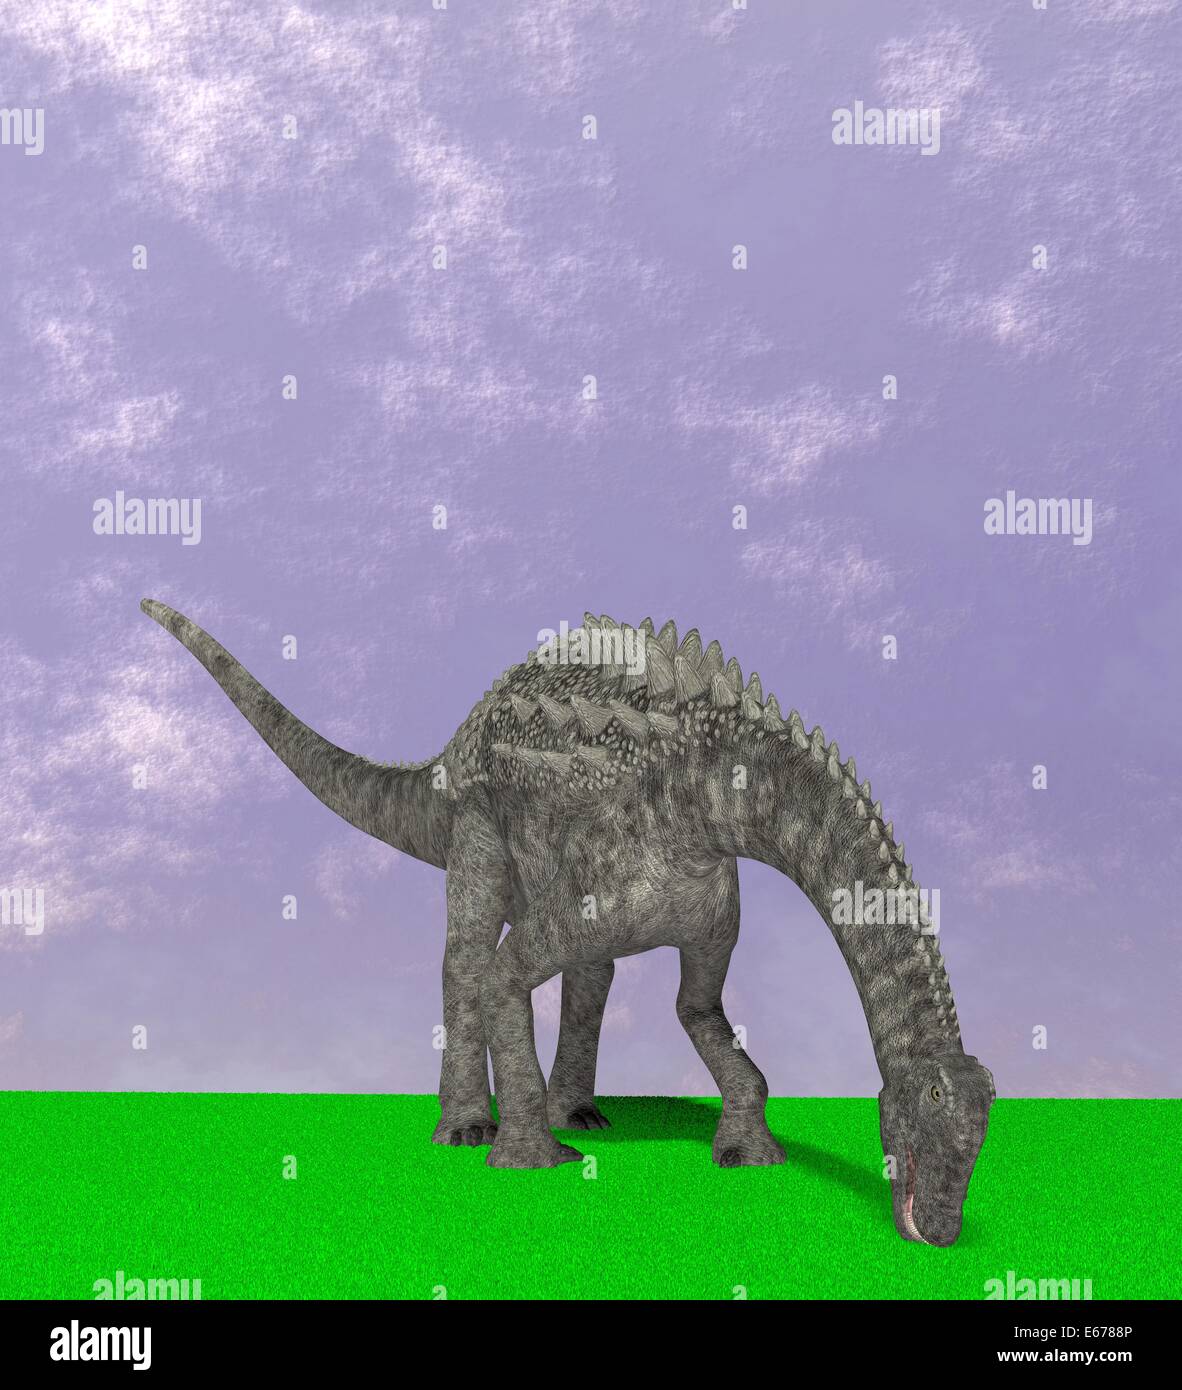 Dinosaurier Ampelosaurus / dinosaur Ampelosaurus Stock Photo - Alamy